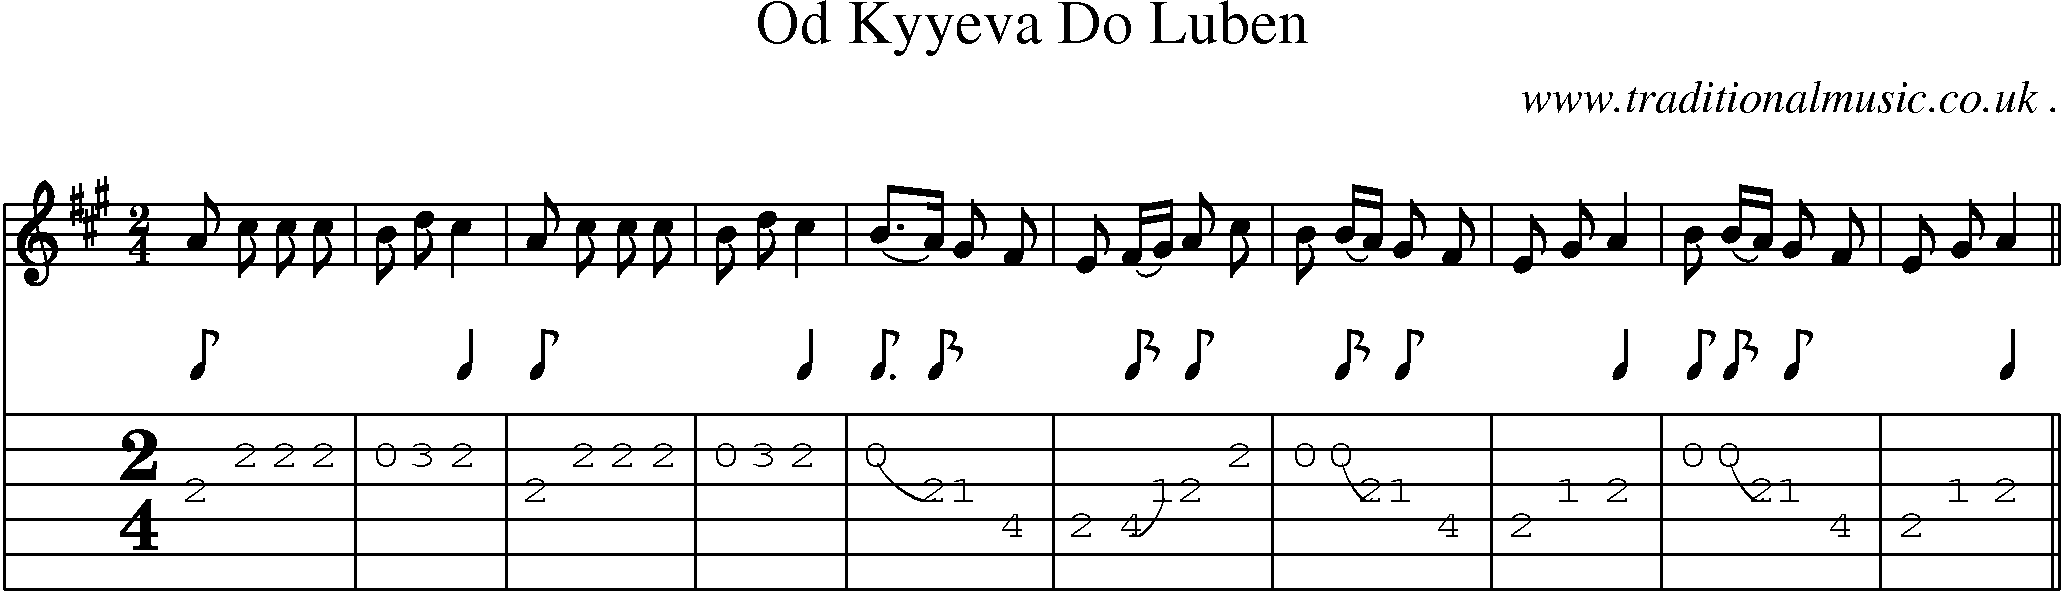 Sheet-Music and Guitar Tabs for Od Kyyeva Do Luben